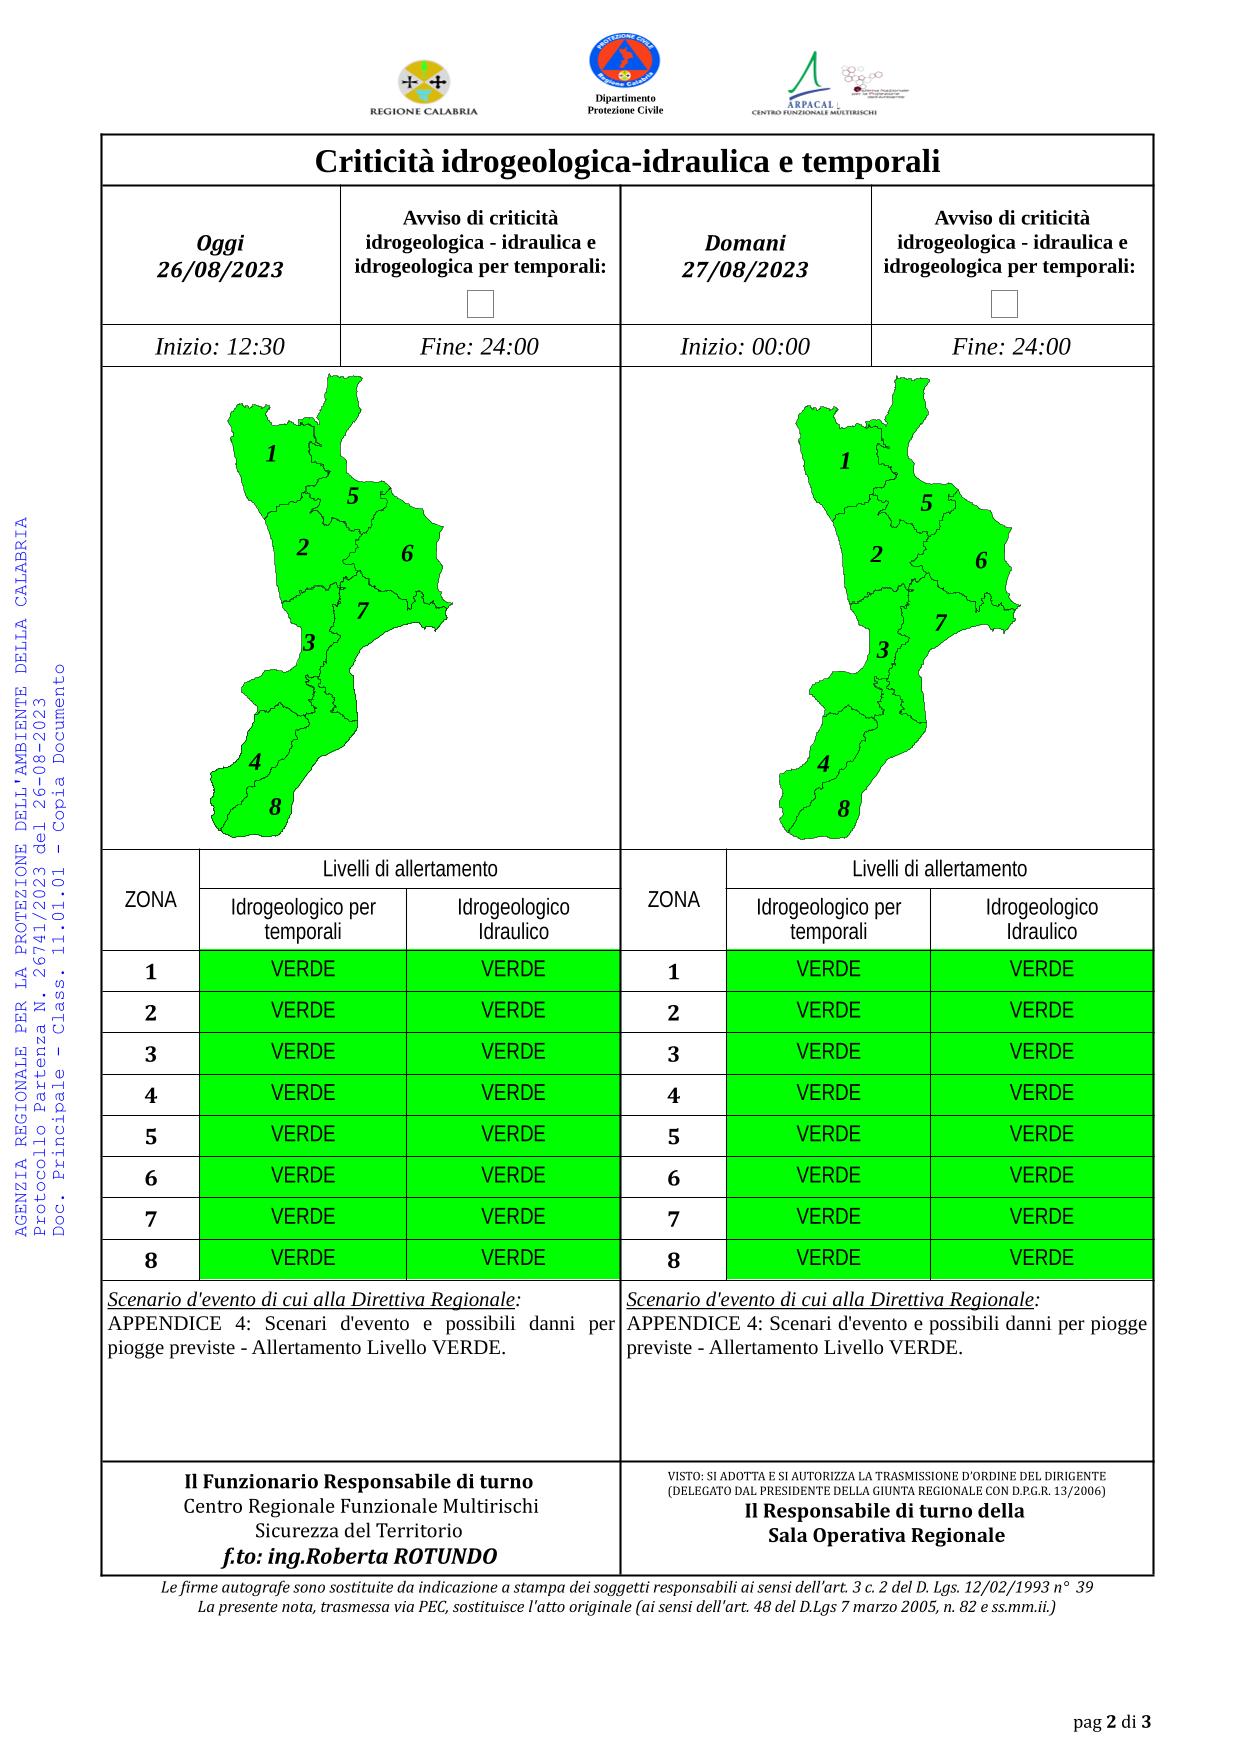 Criticità idrogeologica-idraulica e temporali in Calabria 27-08-2023